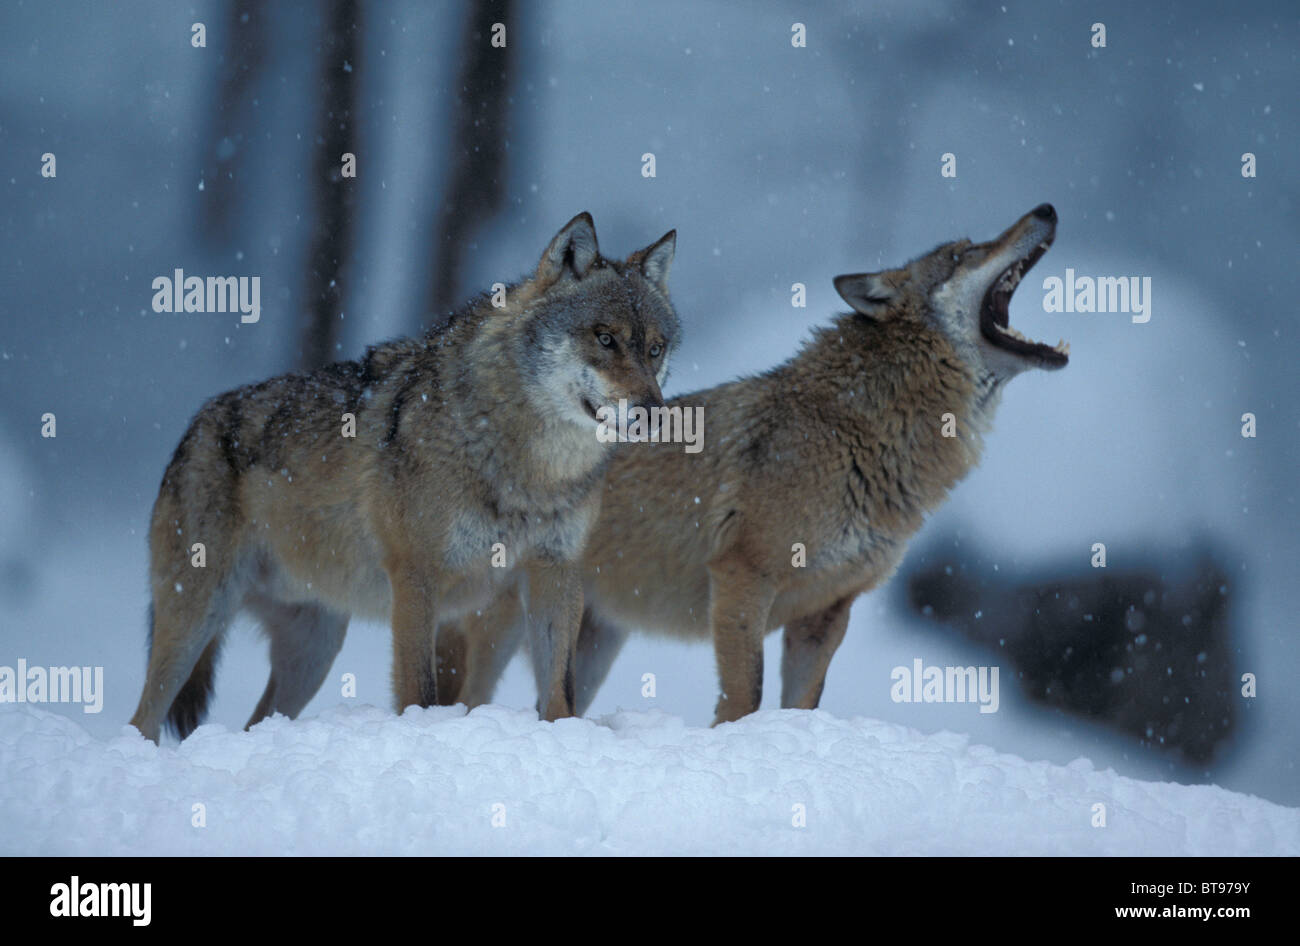 Orientale Lupo canadese o orientale rosso canadese Lupo (Canis lupus lycaon), giovane nella neve, urlando Foto Stock